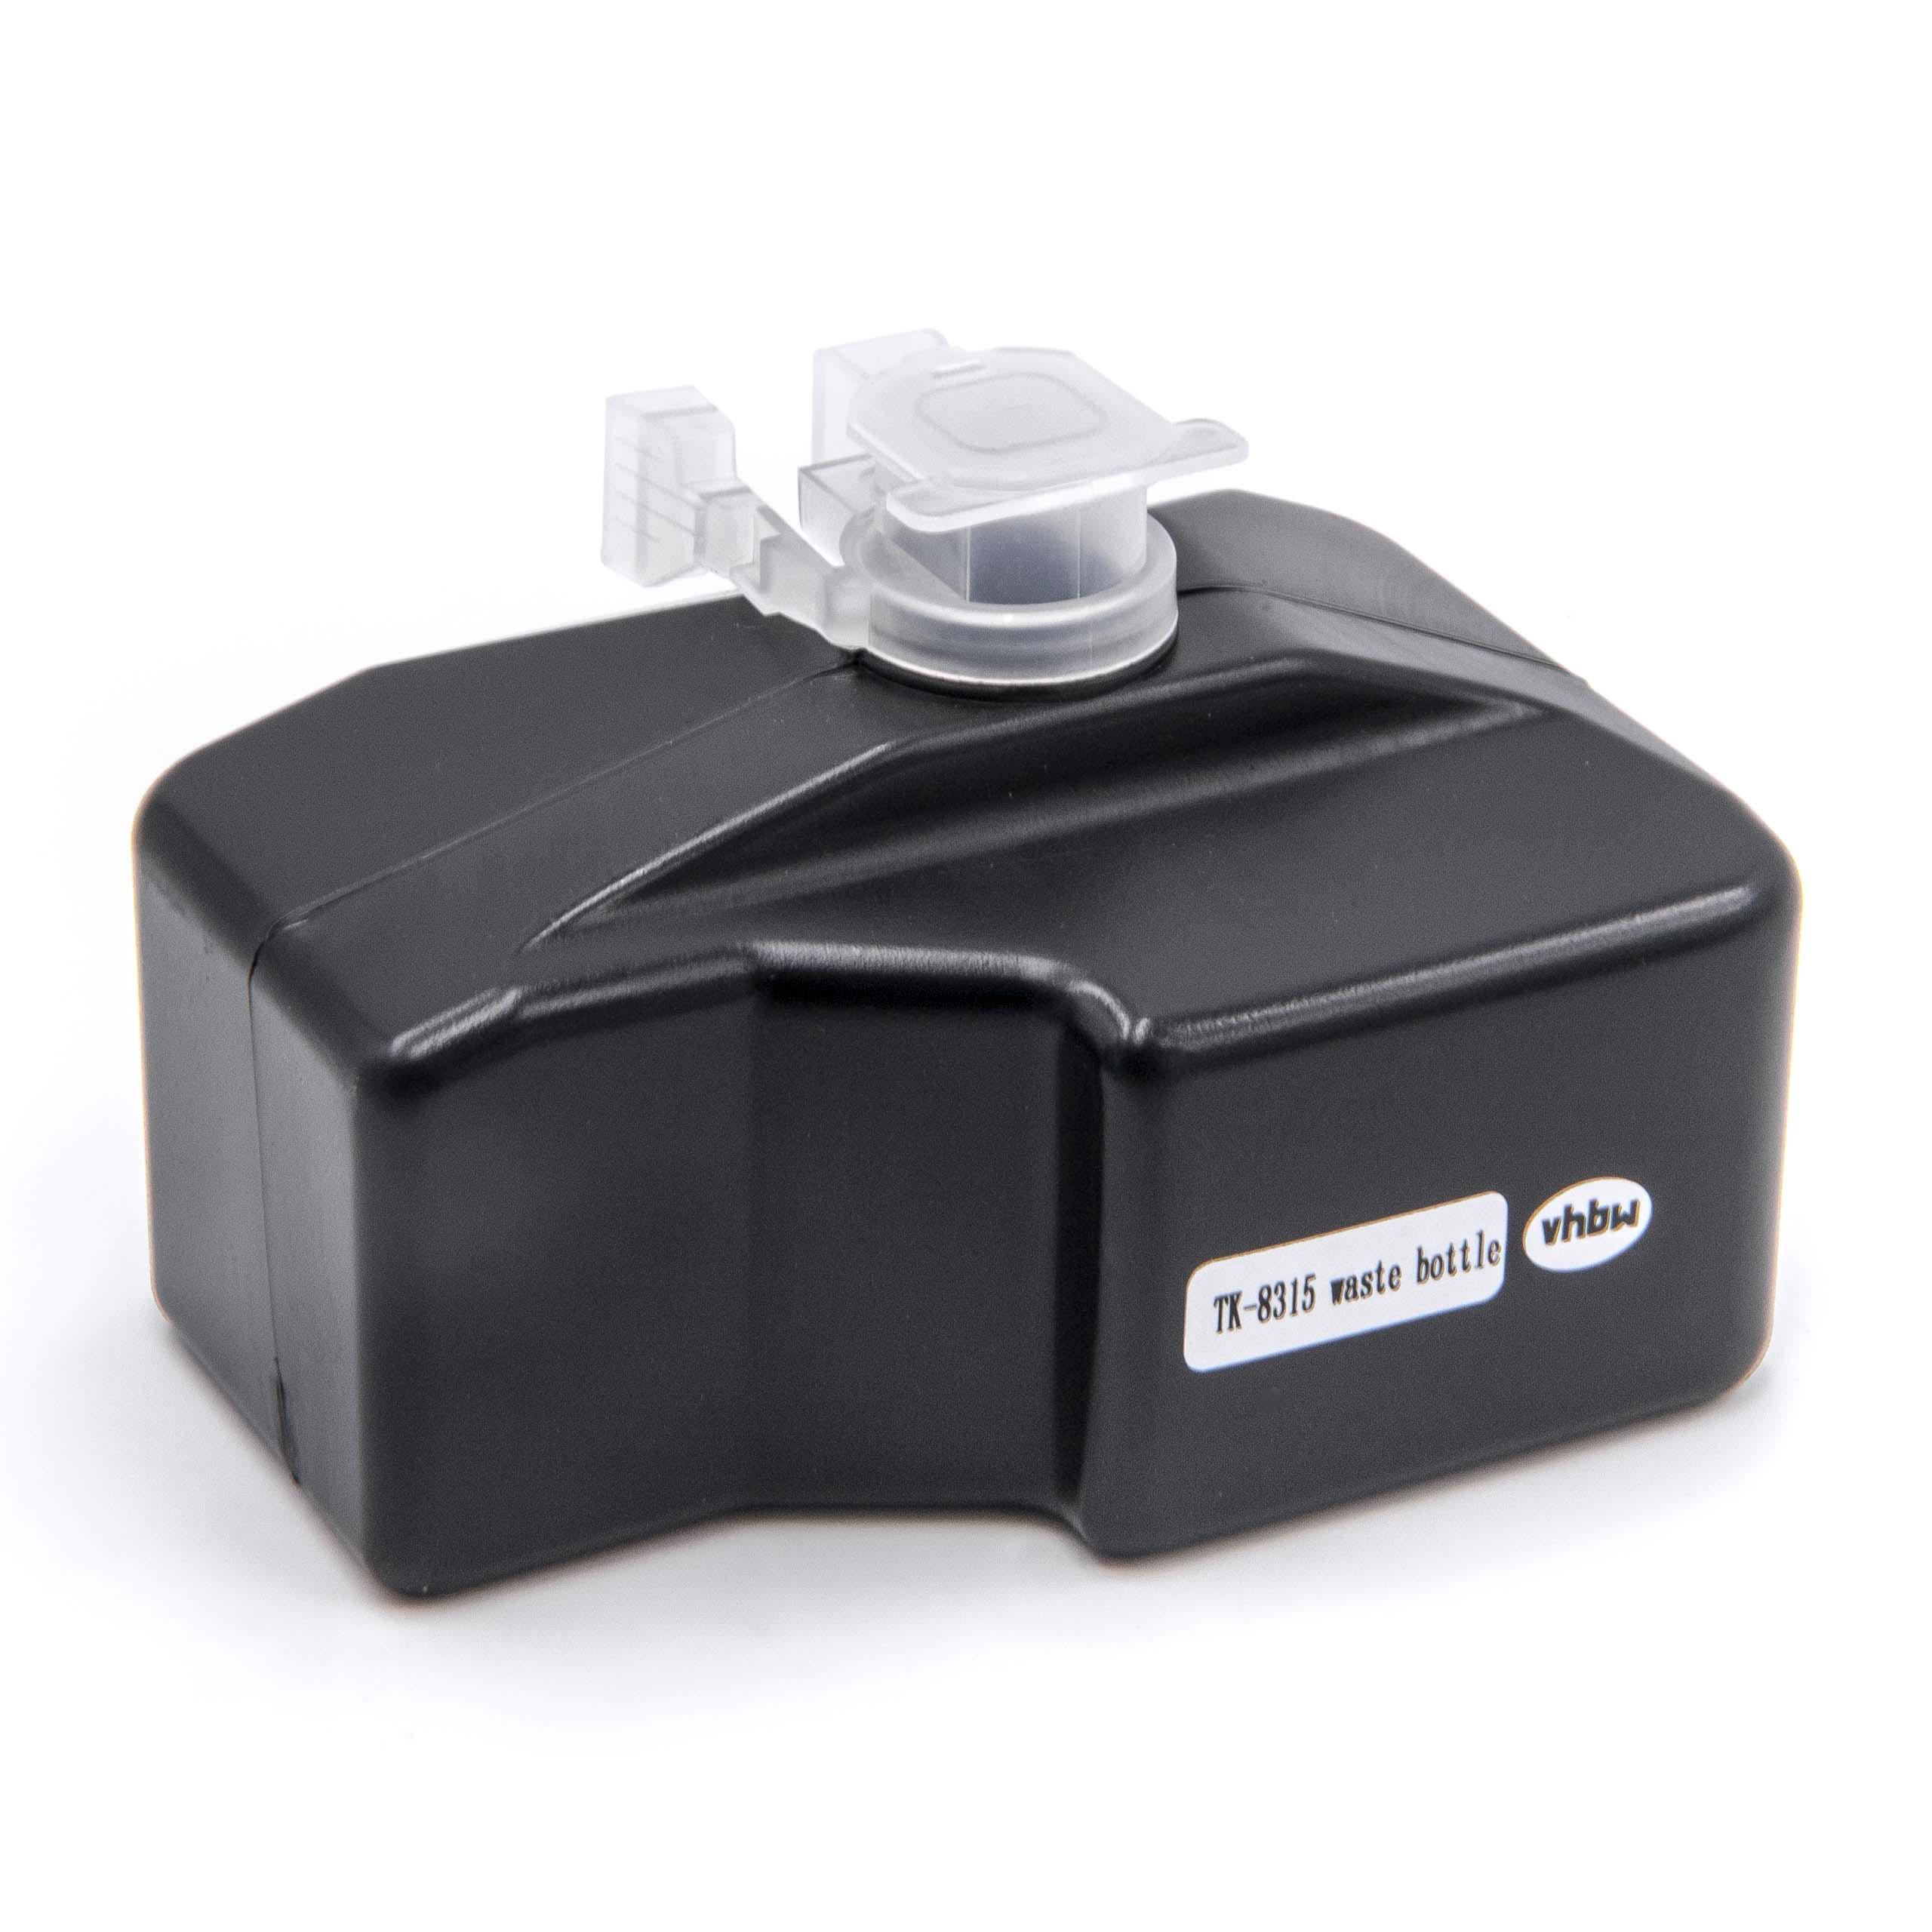 Waste Toner Container for Kyocera TASKalfa 2551ci laser printer - Black